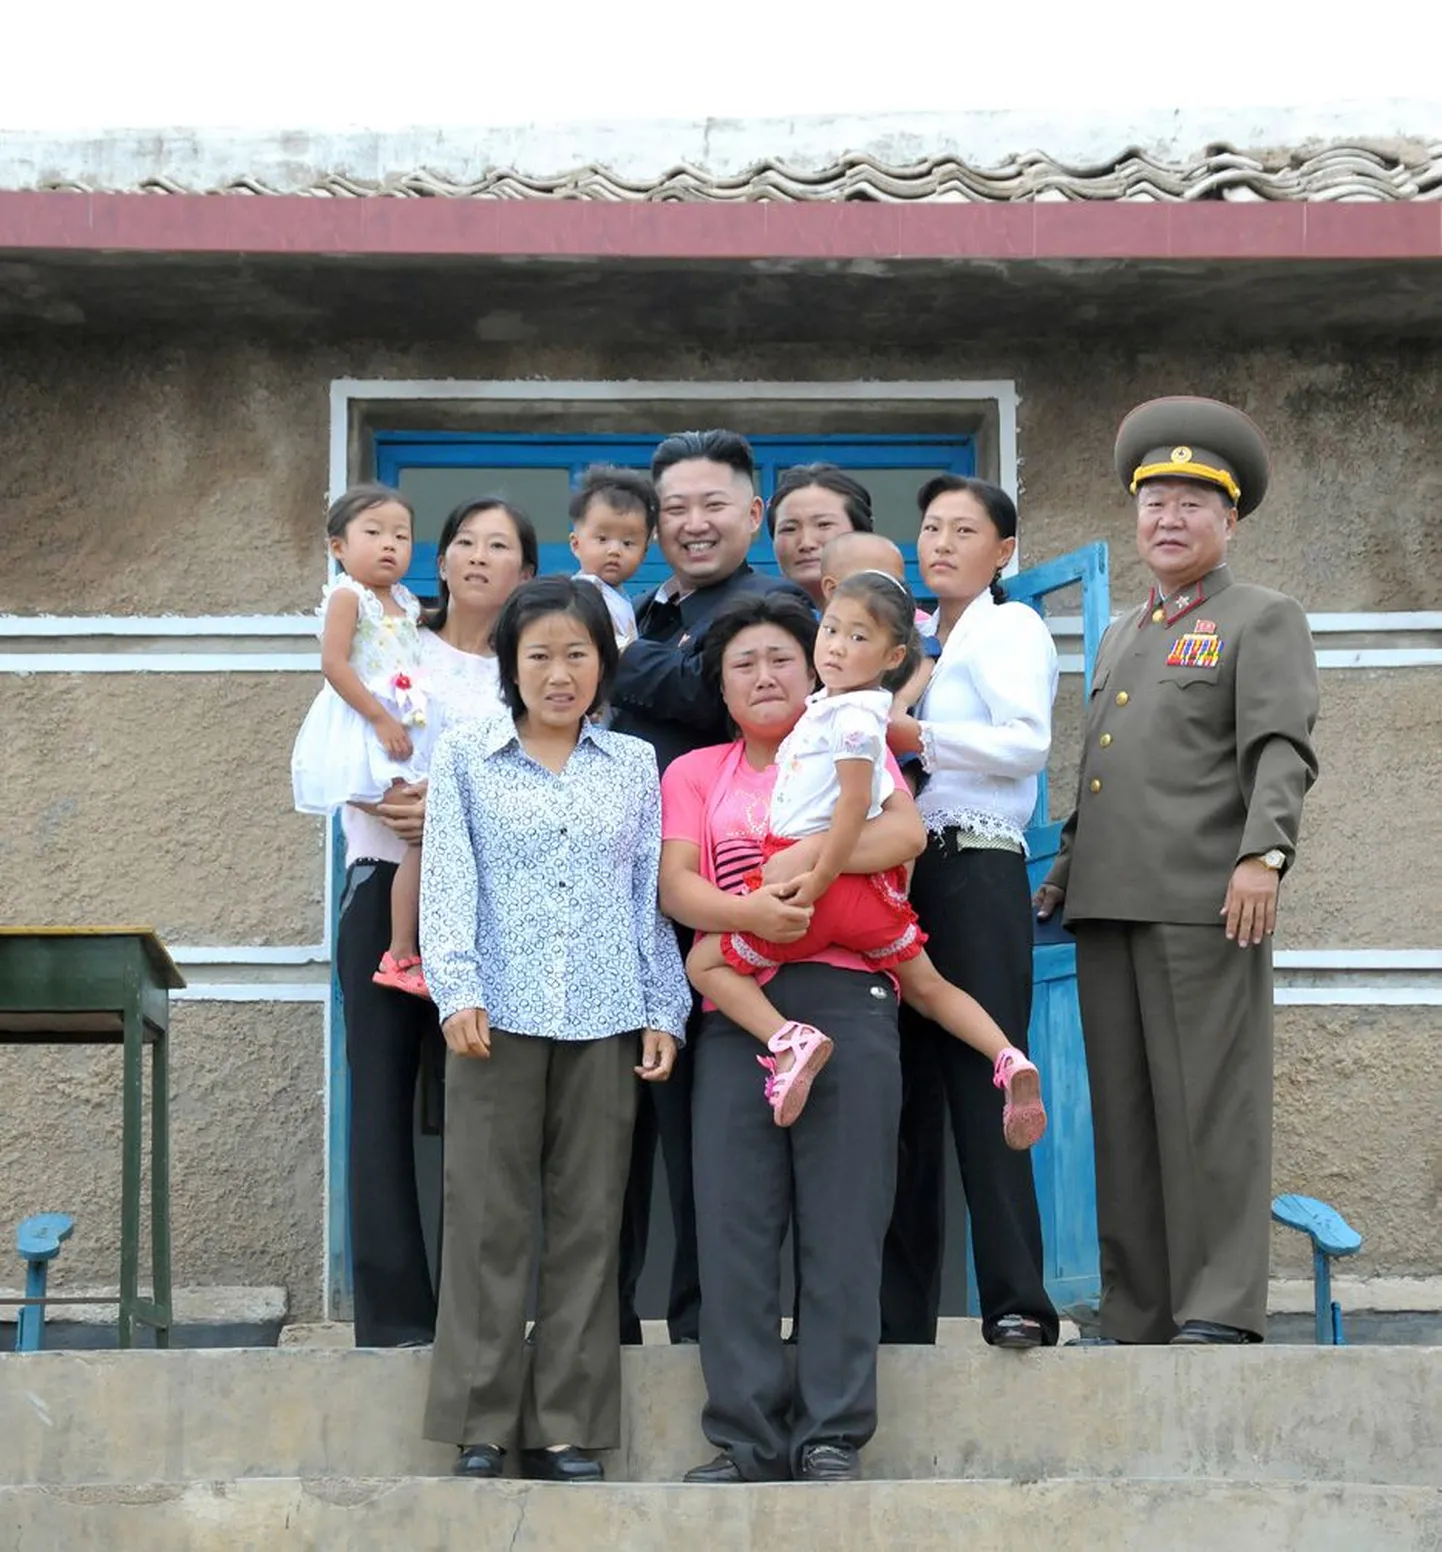 Põhja-Korea juht Kim Jong-un poseerimas koos naiste ja lastega